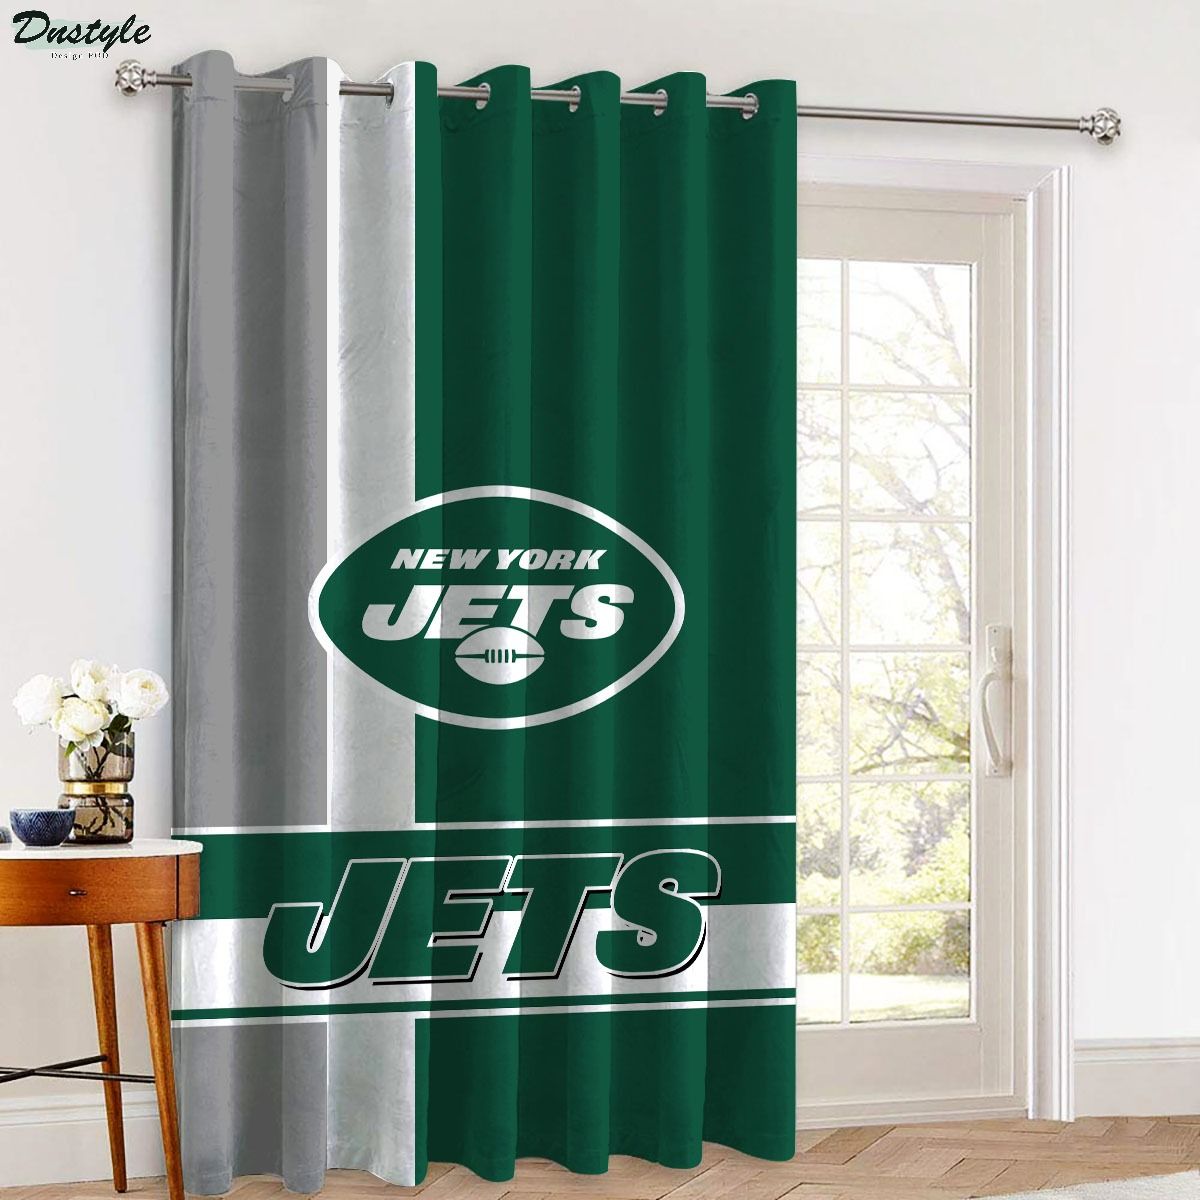 New York Jets NFL Window Curtains